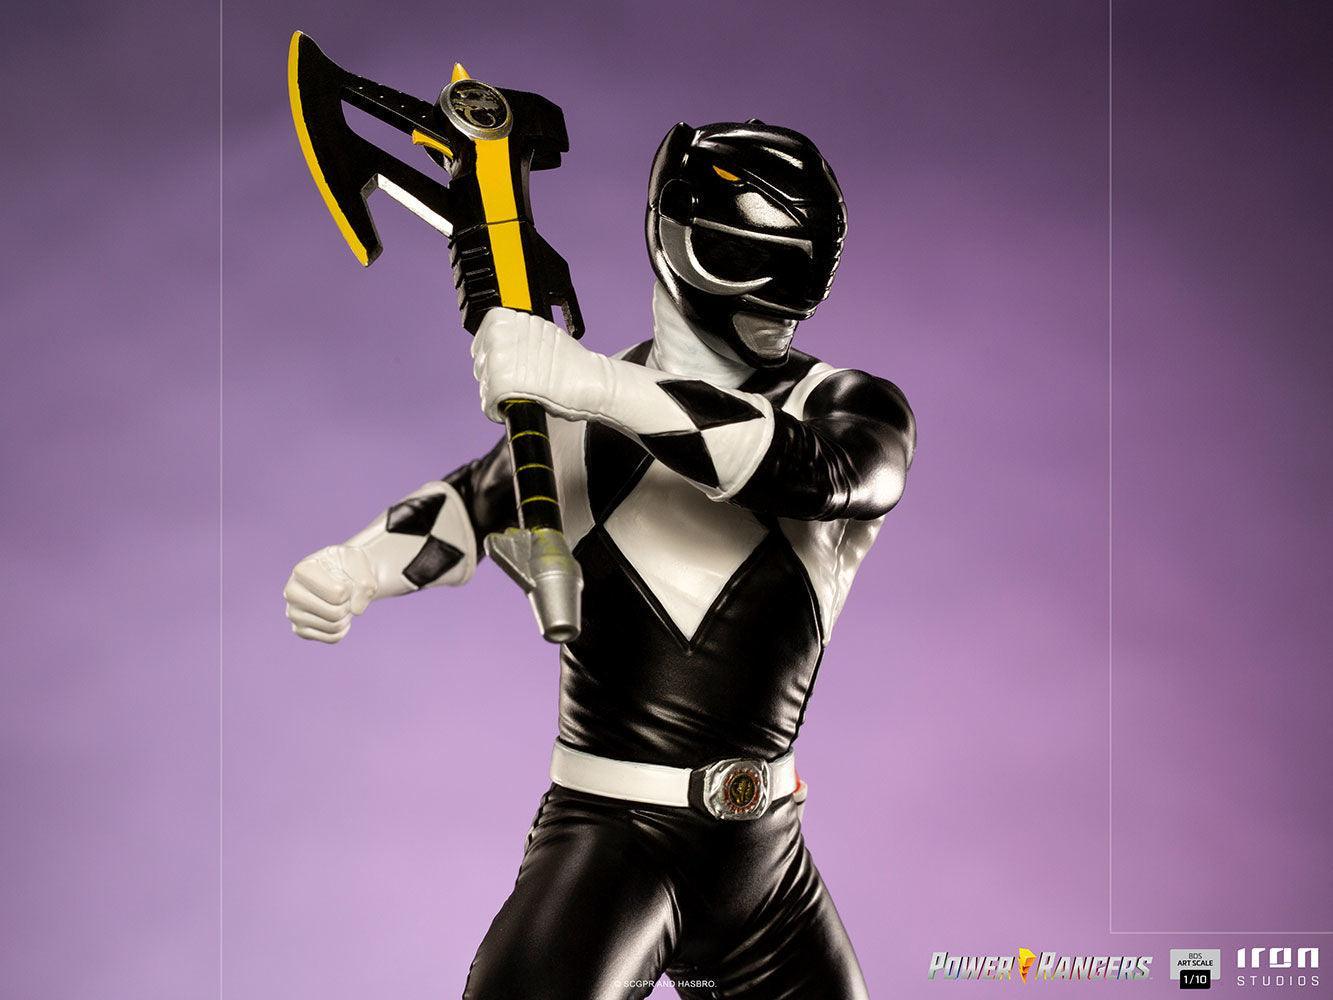 IRO28150 Power Rangers - Black Ranger 1:10 Scale Statue - Iron Studios - Titan Pop Culture